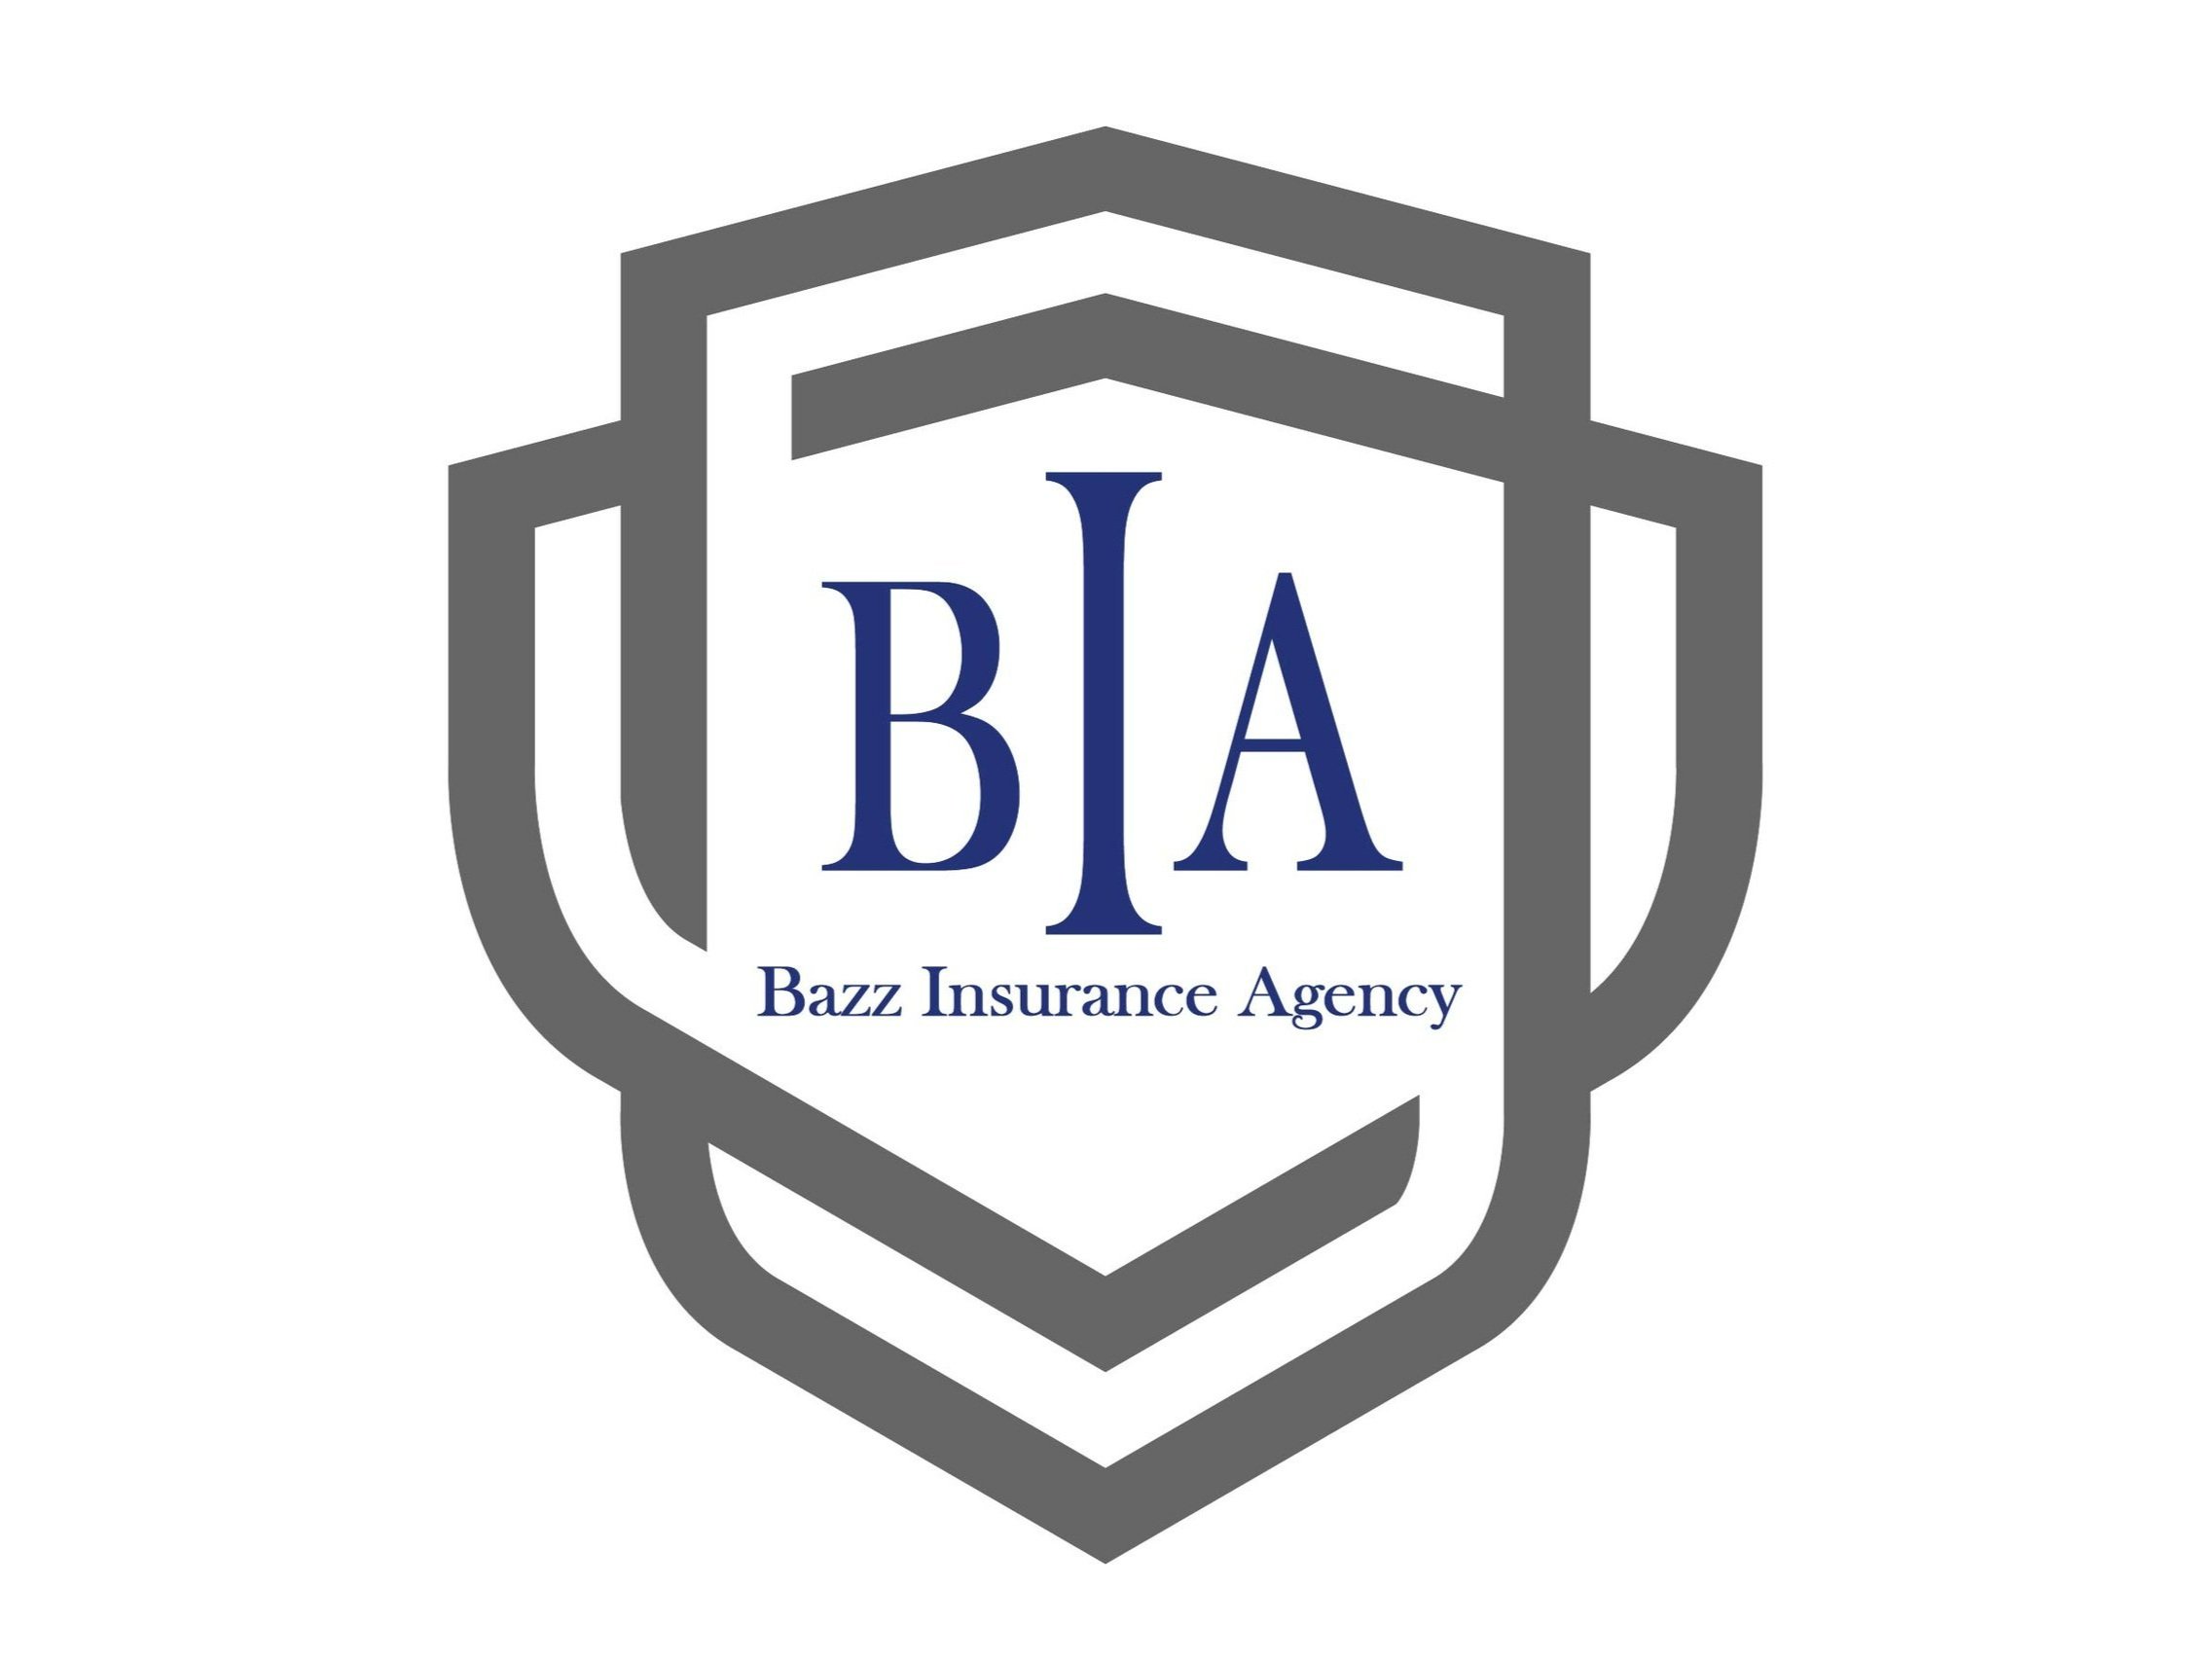 Bazz Insurance Agency